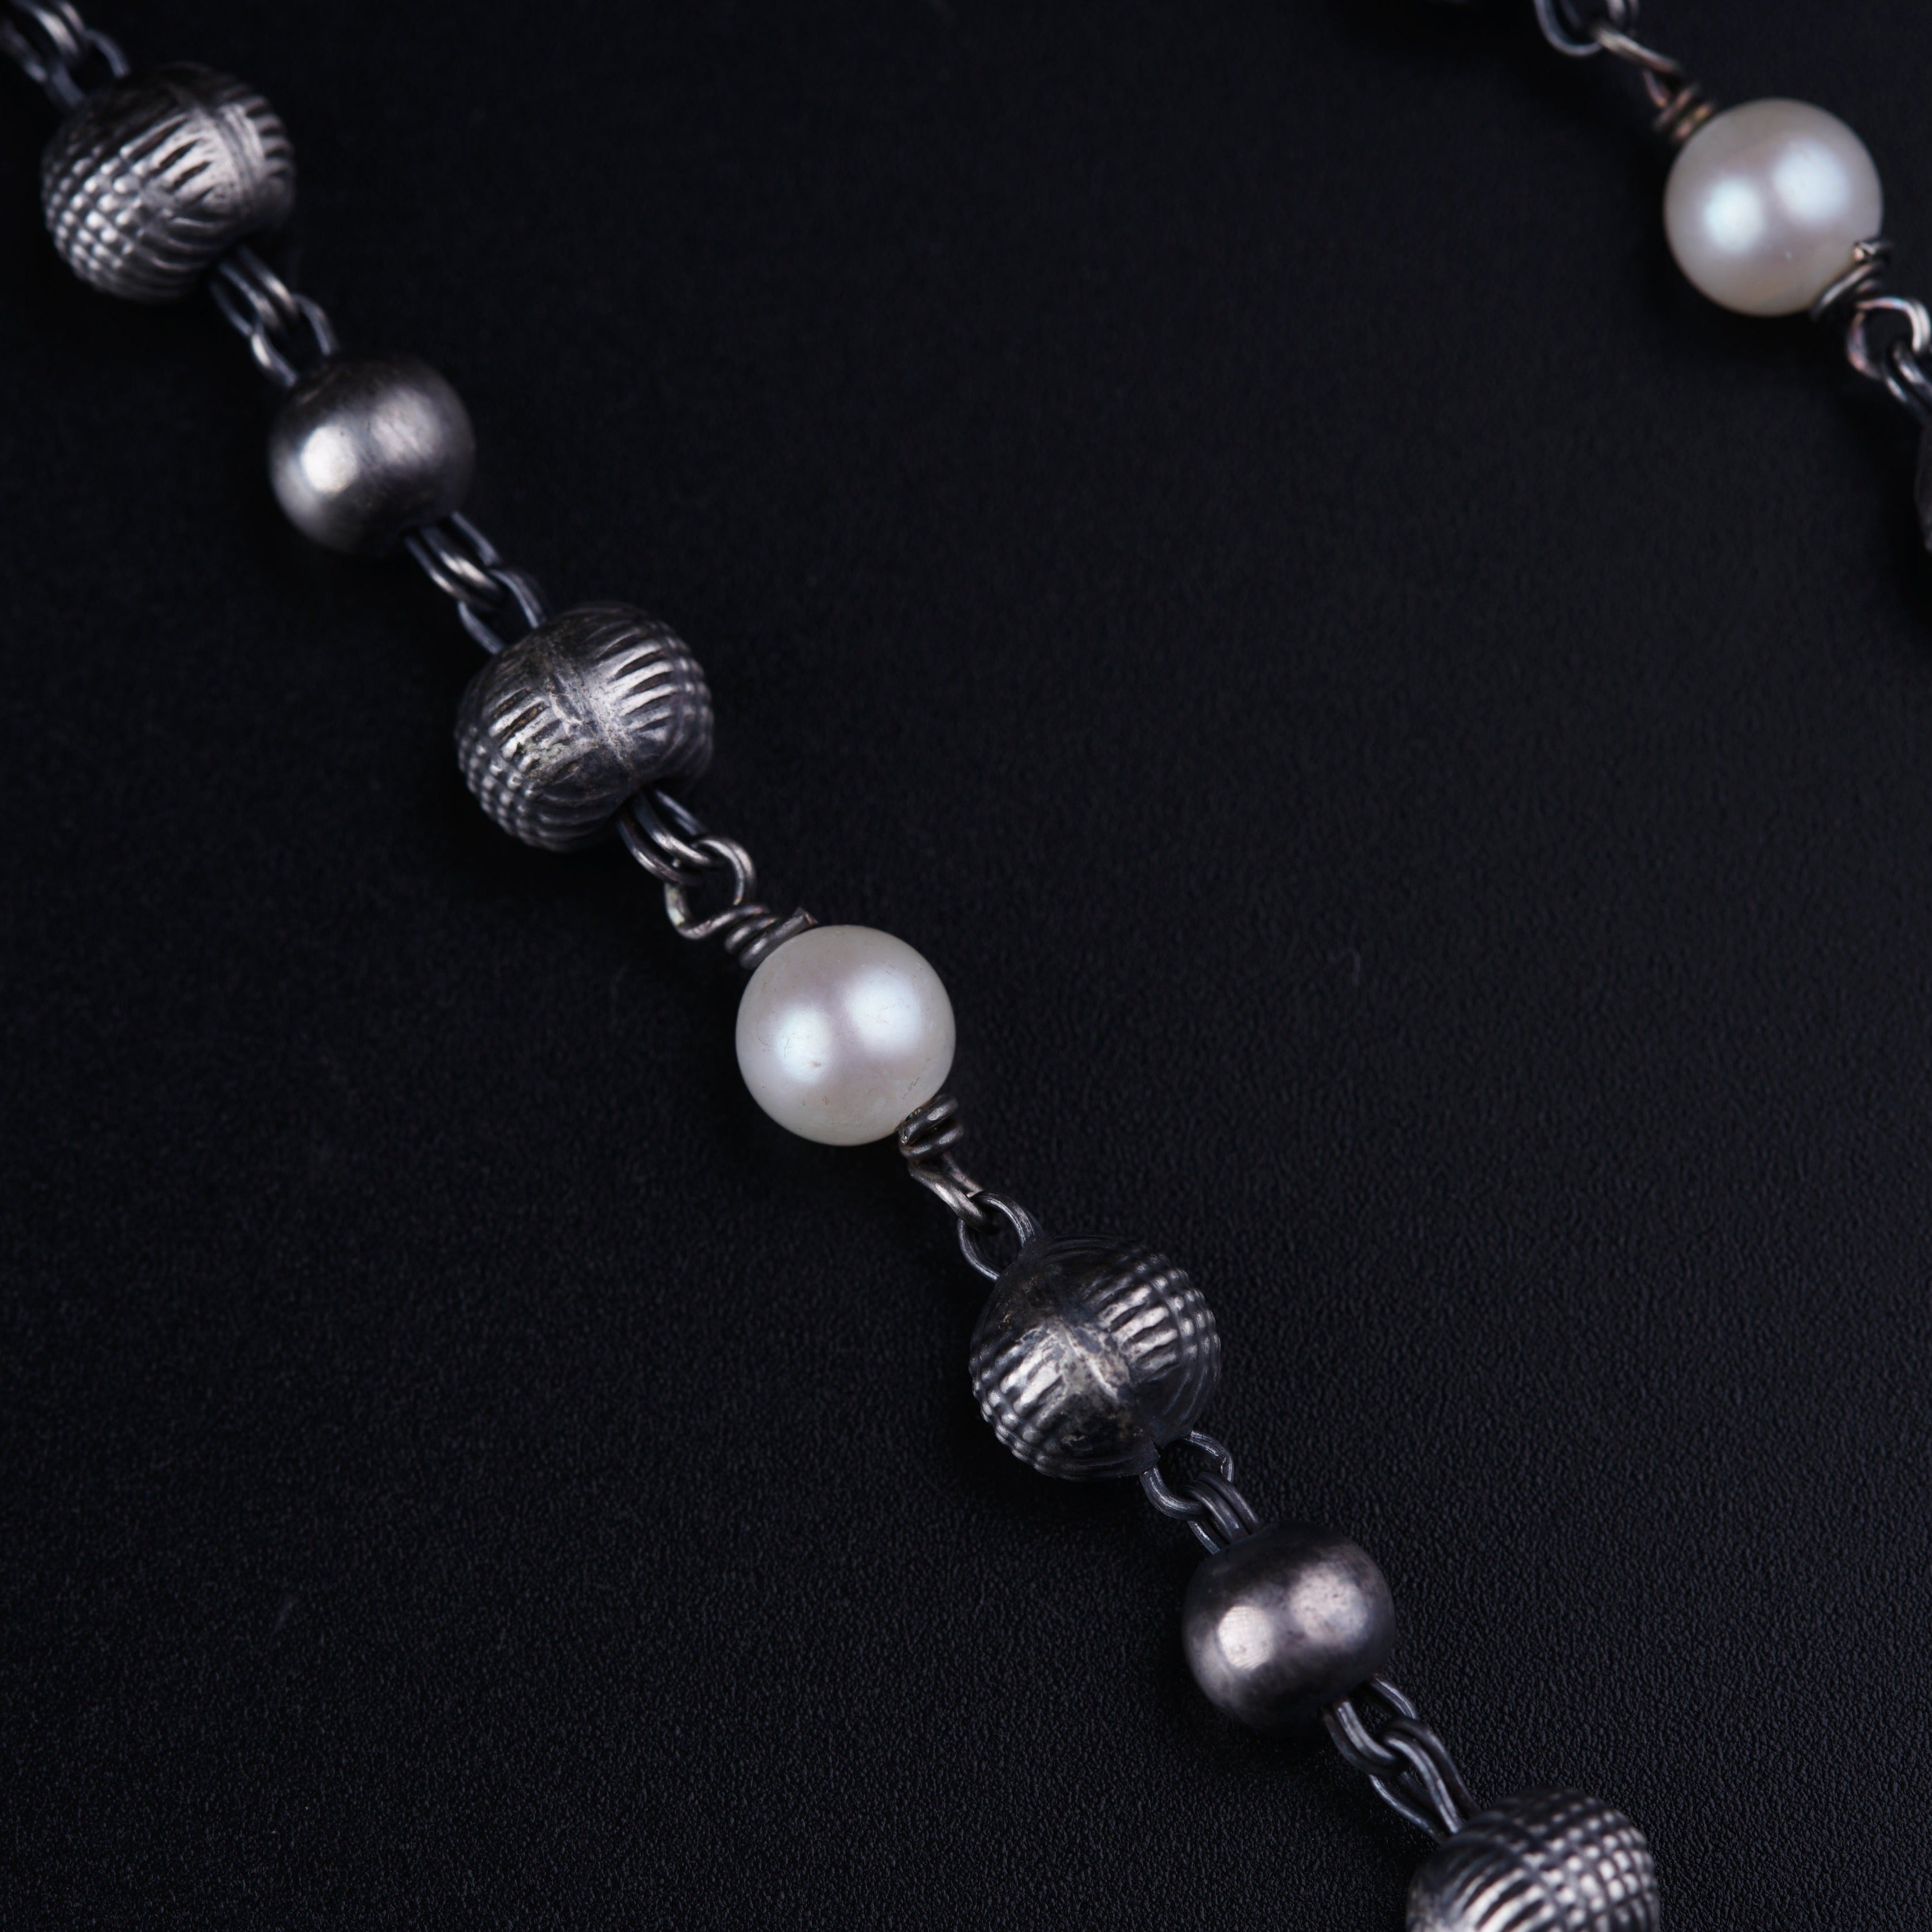 Silver Ganesh Pendant Necklace